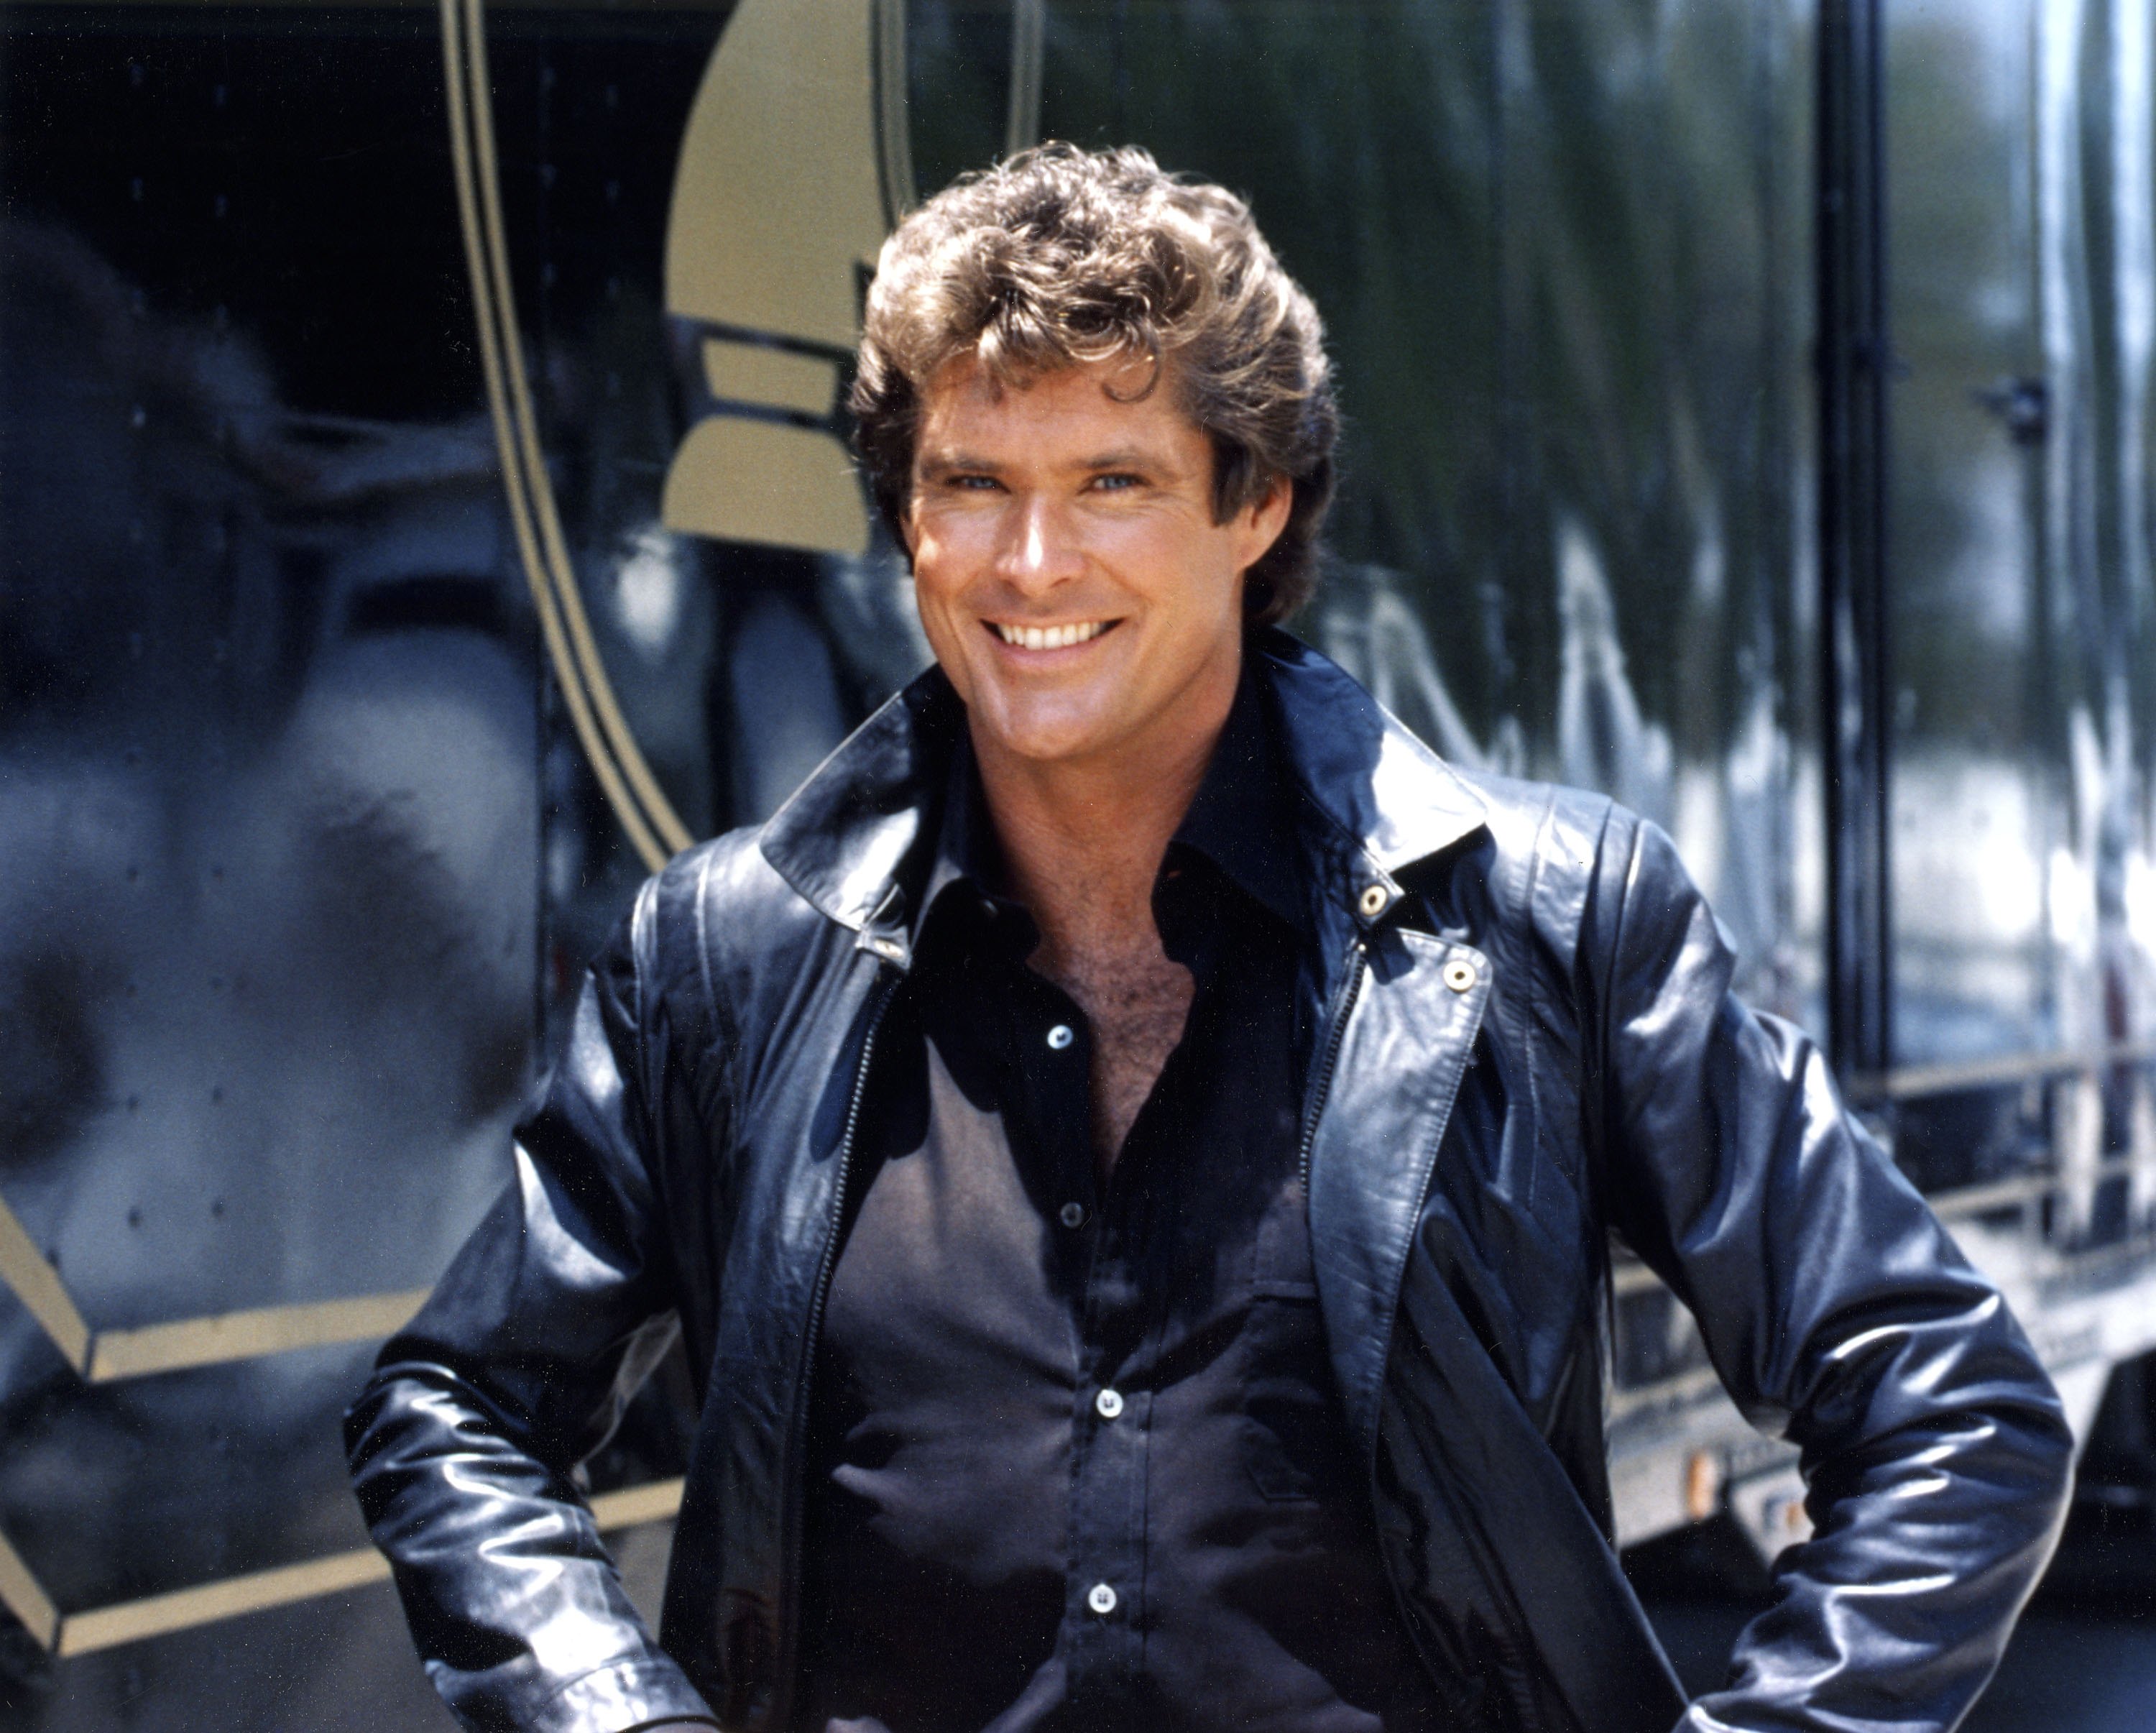 David Hasselhoff dans "Knight Rider" en 1985 | Source : Getty Images